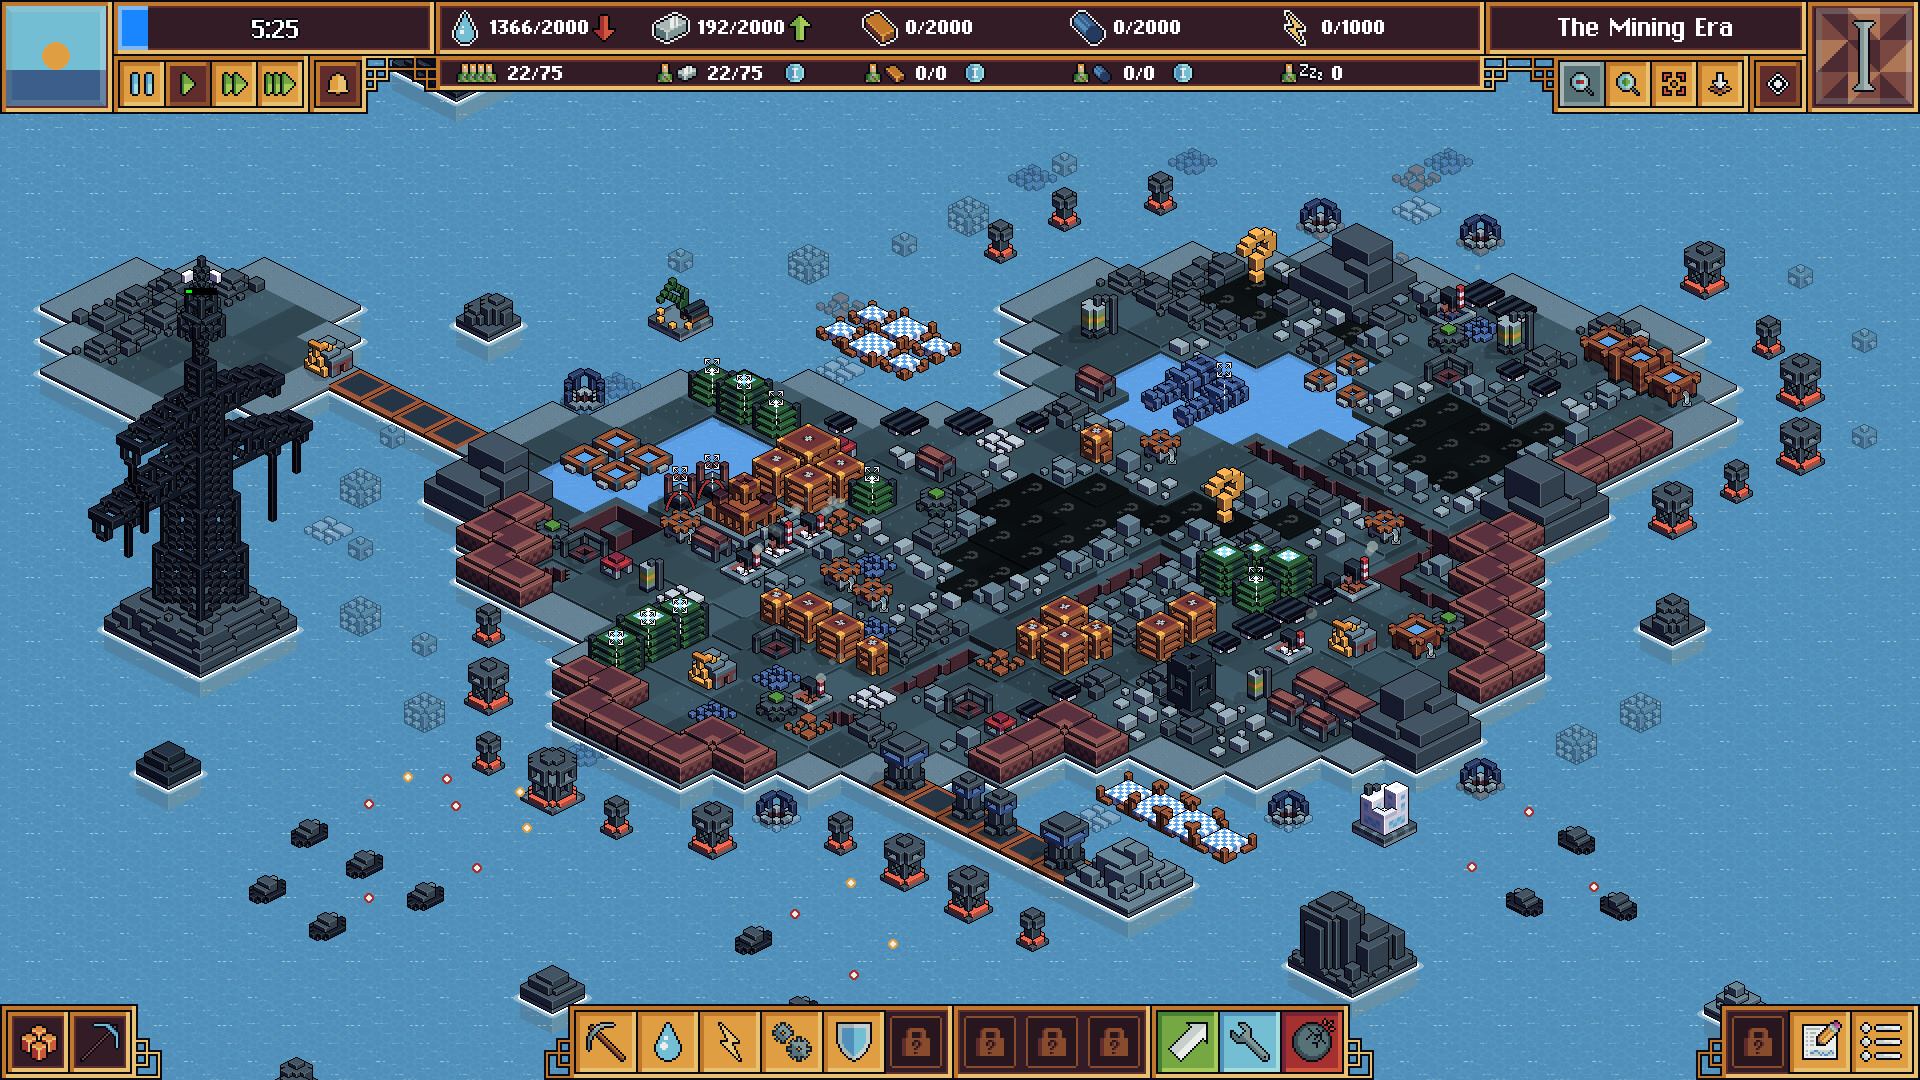 Flooded gameplay screenshot